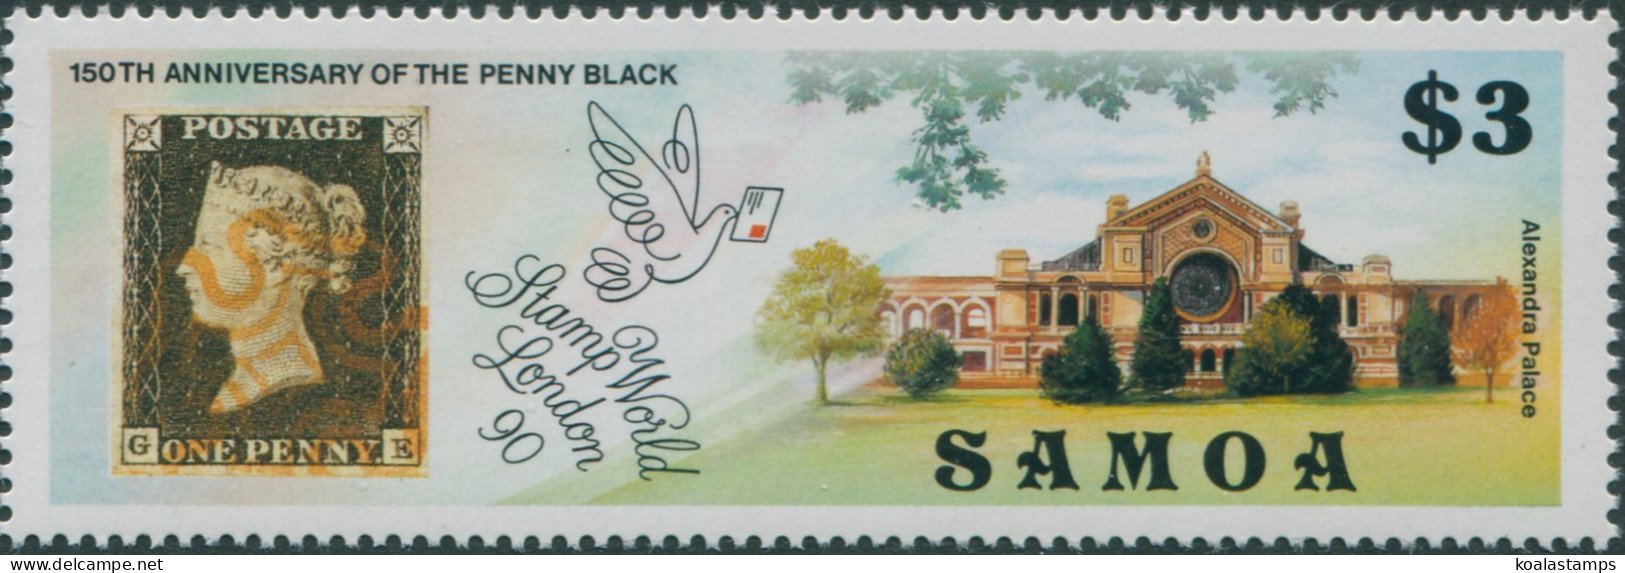 Samoa 1990 SG846 $3 Stampworld London Penny Black MNH - Samoa